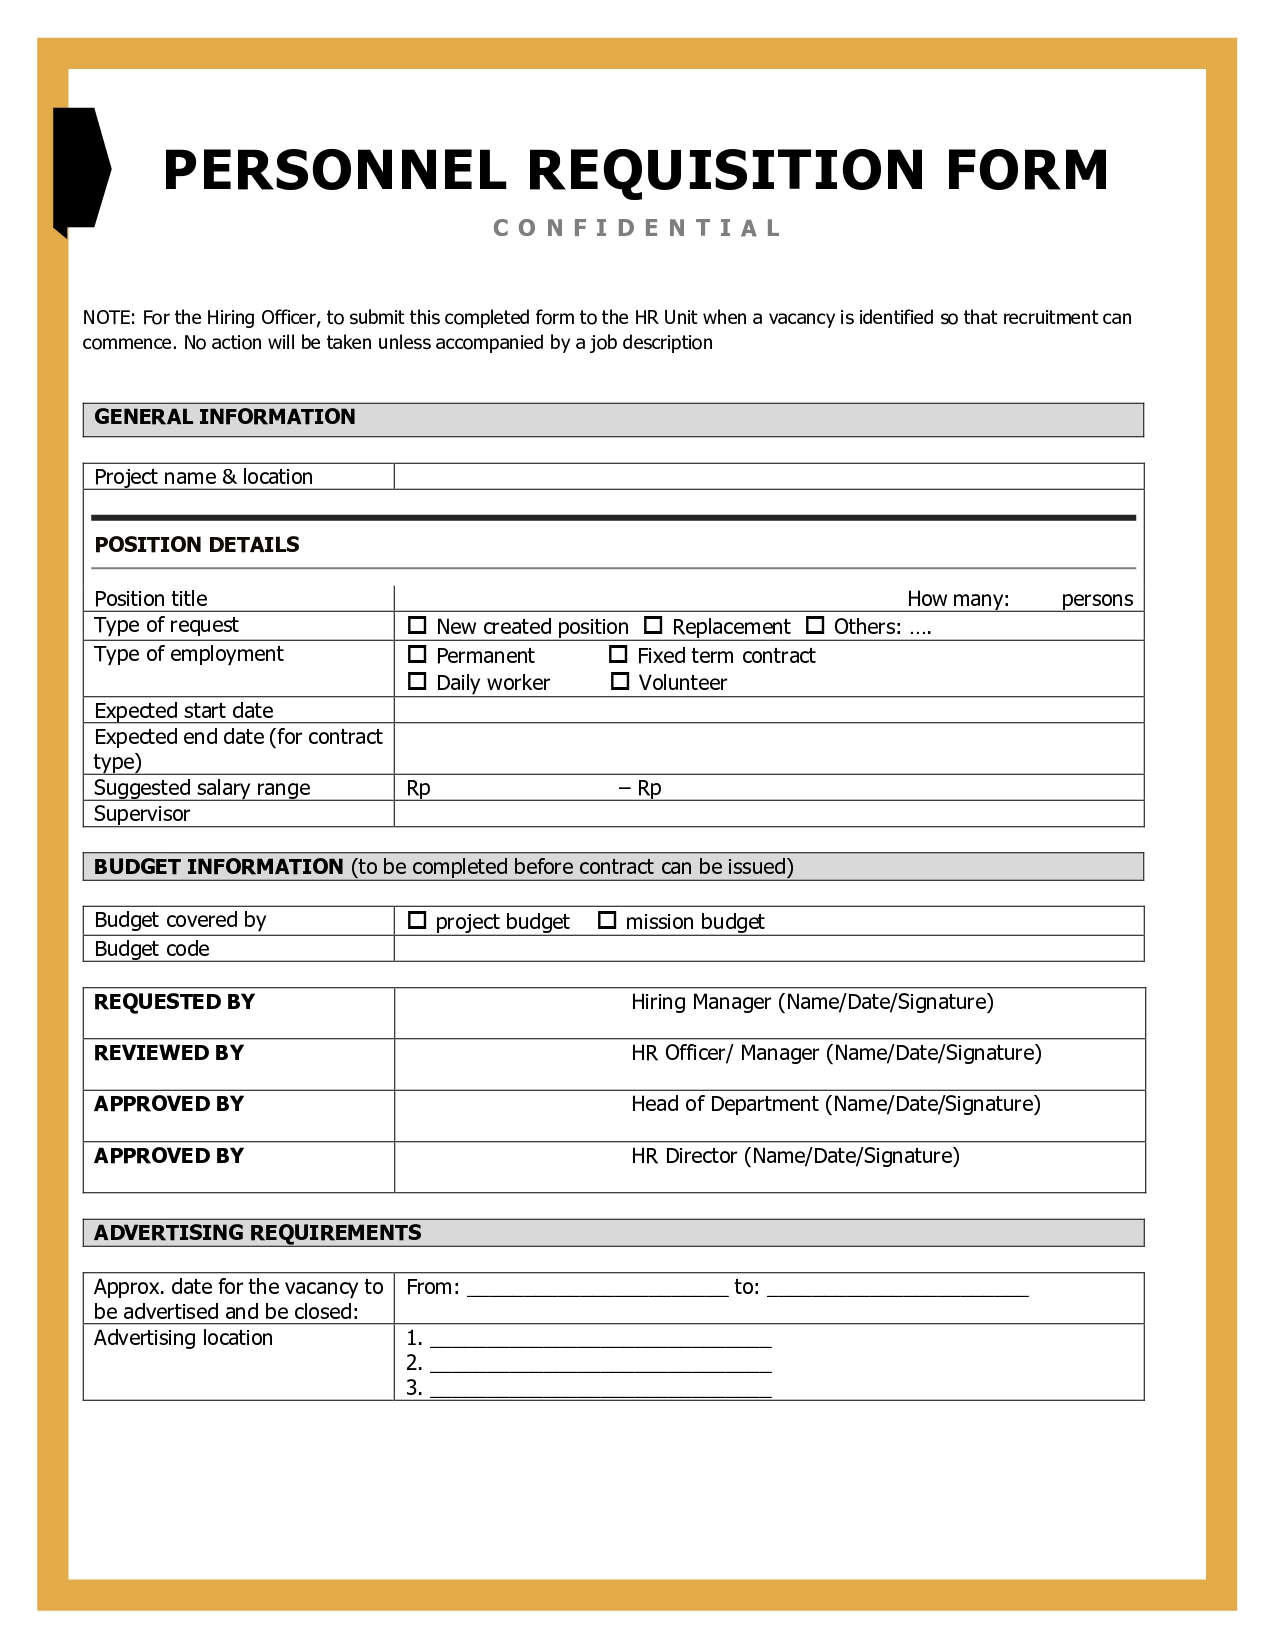 Personnel Requisition Form_page-0001